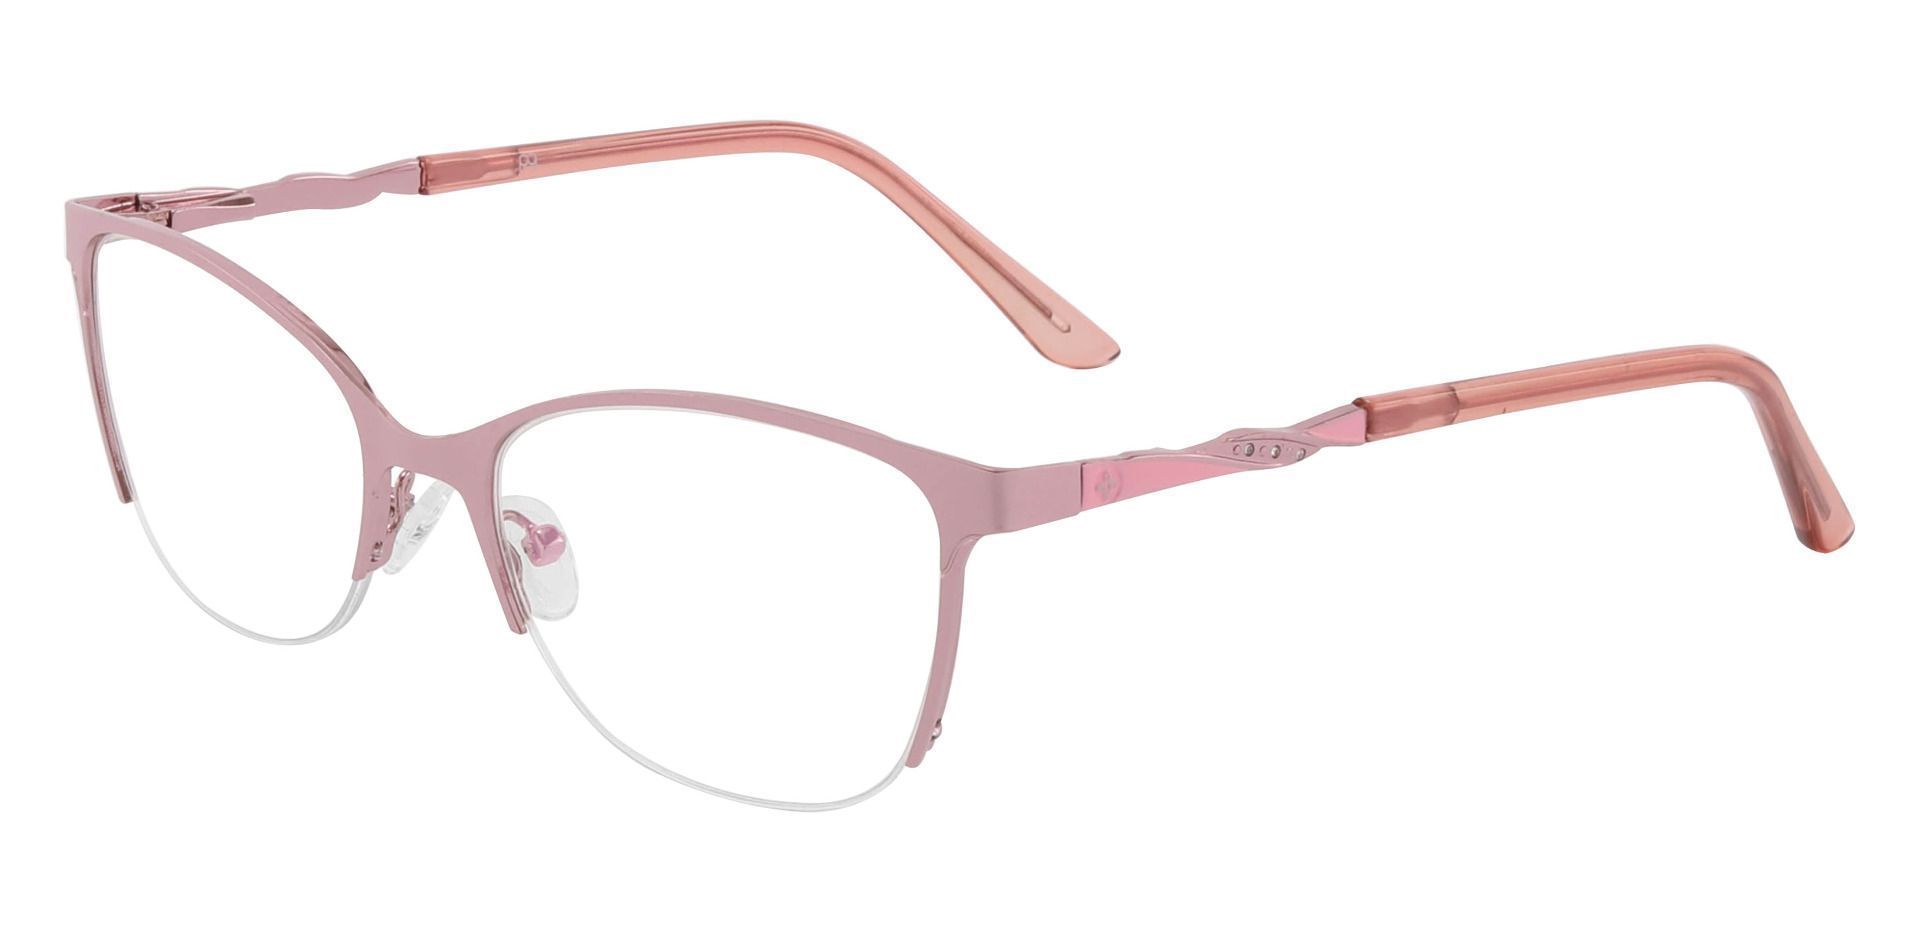 Topeka Cat Eye Prescription Glasses - Pink